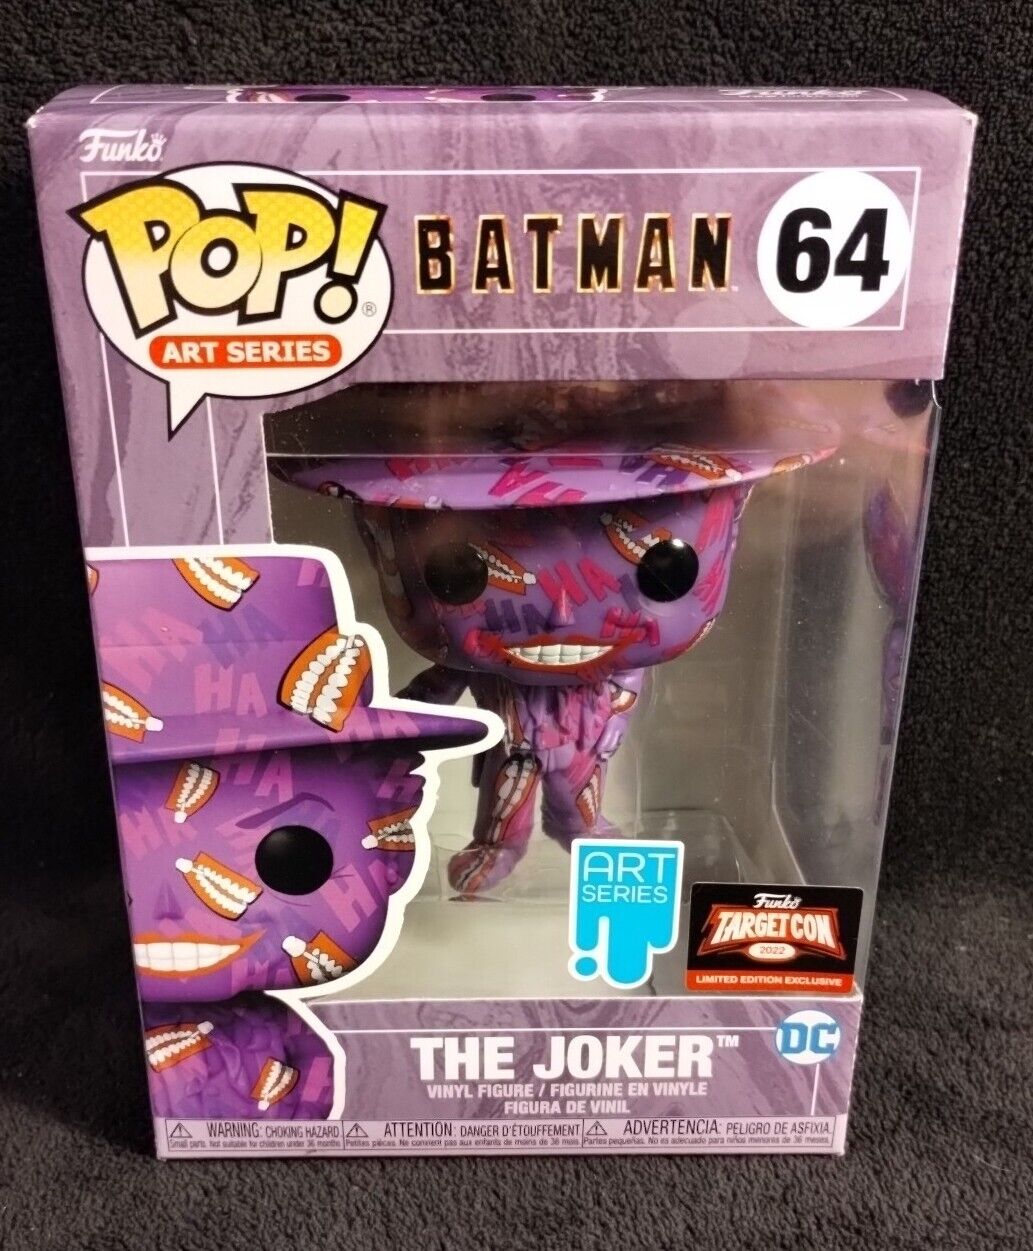 The Joker 64 Funko Pop Art Series Batman Targetcon 2022 - New In box/protector